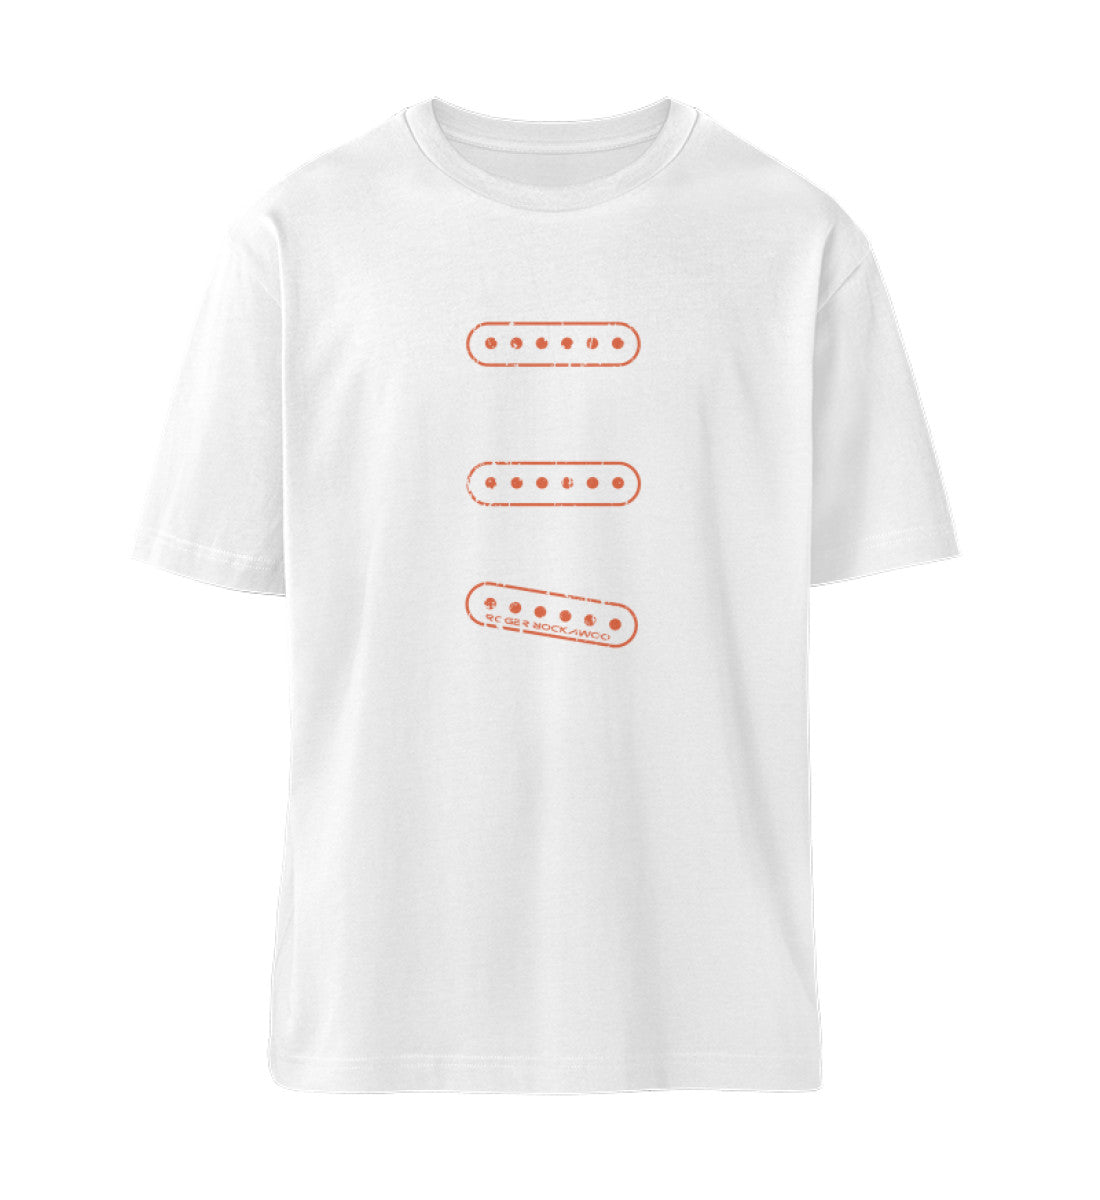 Weißes T-Shirt Unisex Relaxed Fit für Frauen und Männer bedruckt mit dem Design der Roger Rockawoo Kollektion E-Gitarren Single Coil Set Up